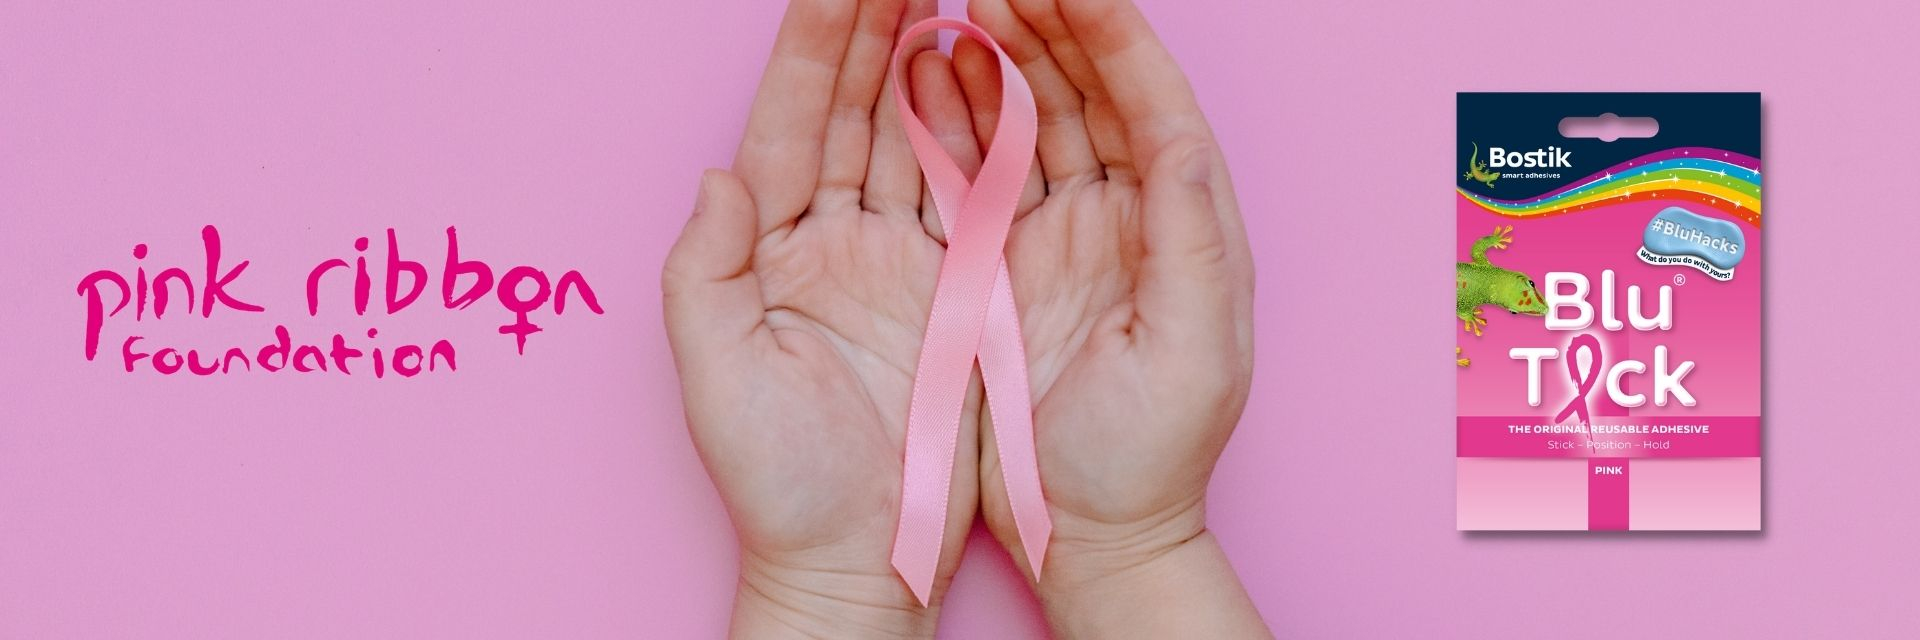 Bostik DIY UK Pink Ribbon Foundation banner image